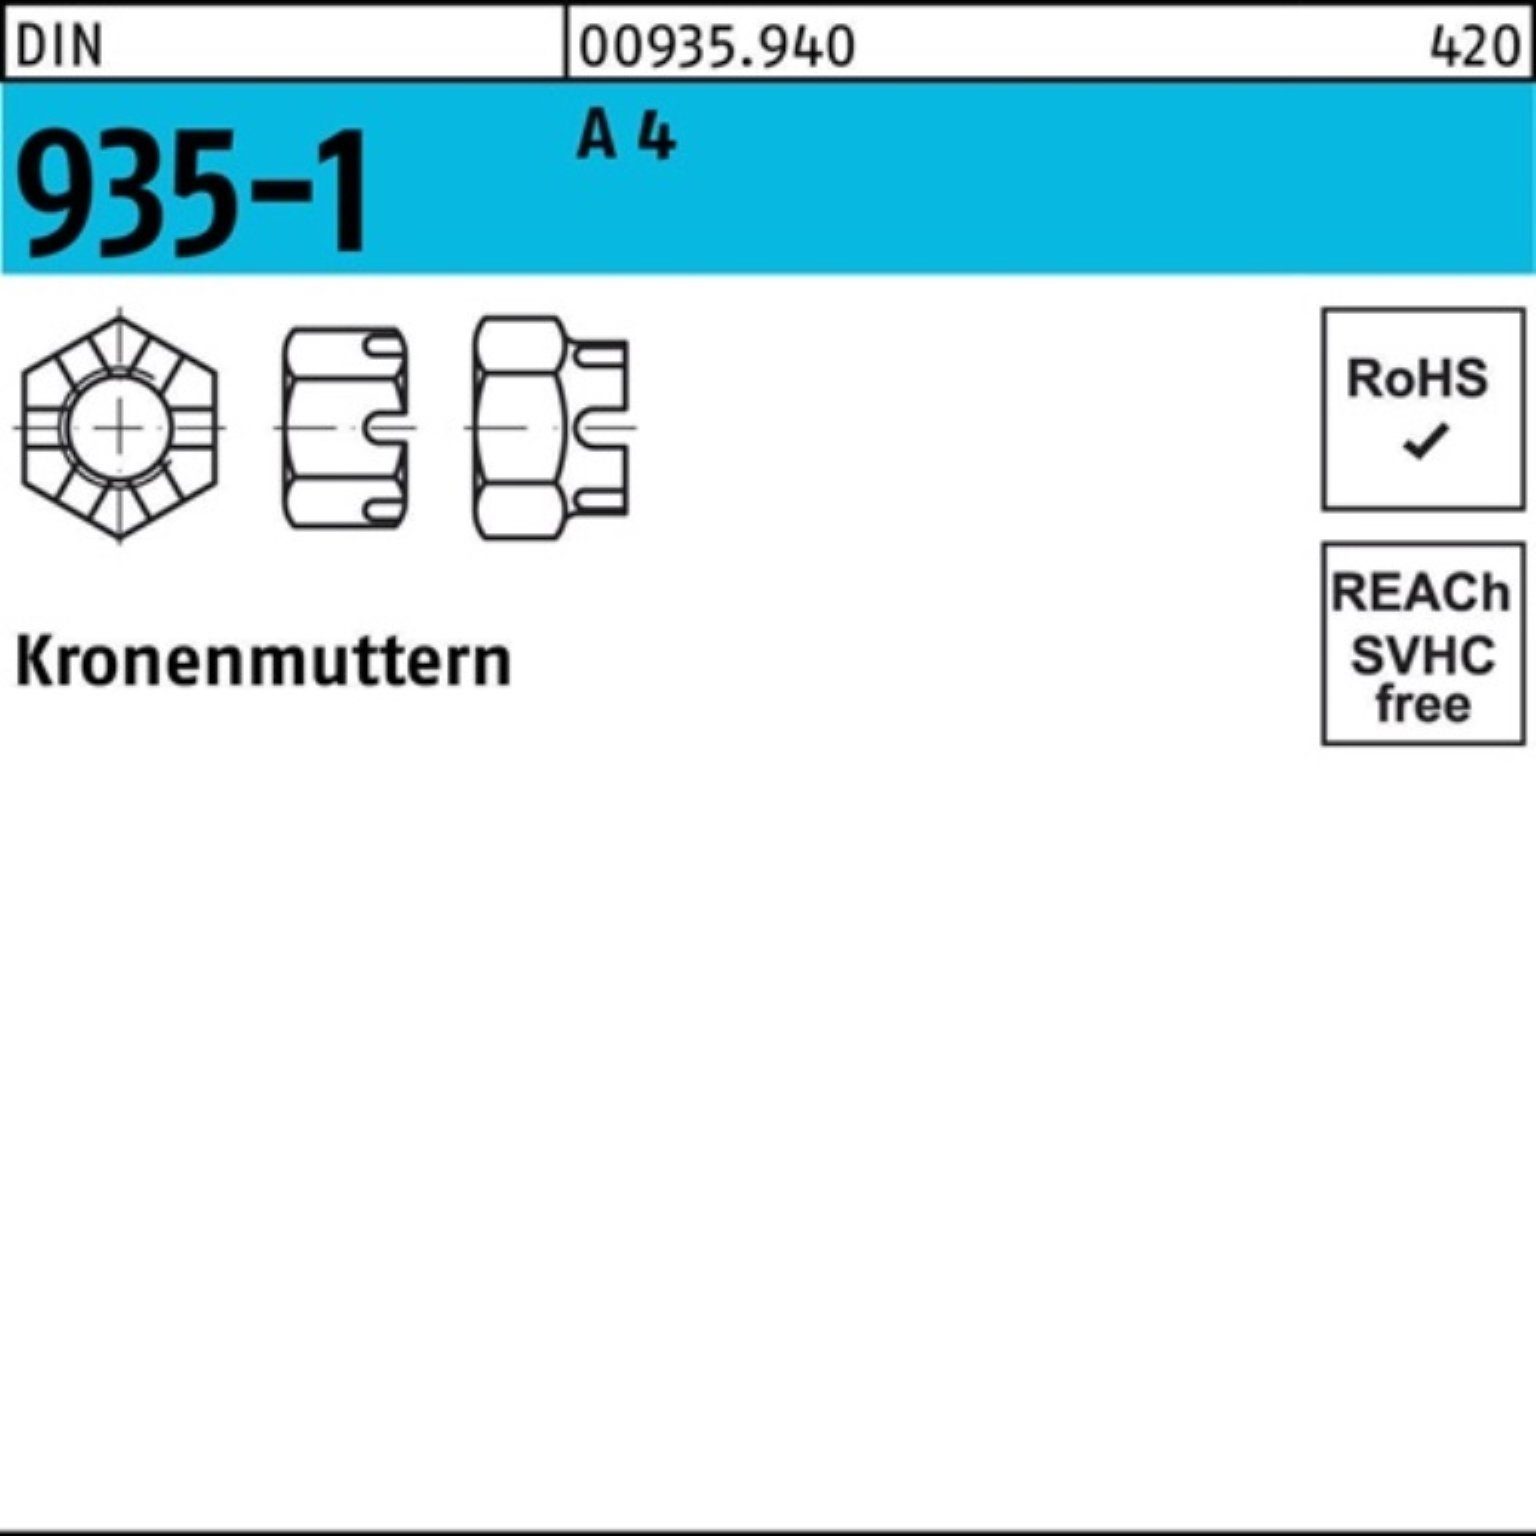 Reyher 4 DIN 4 A Krone 100er Kronenmutter 935-1 1 935-1 DIN Kronenmutter A M30 Stück Pack